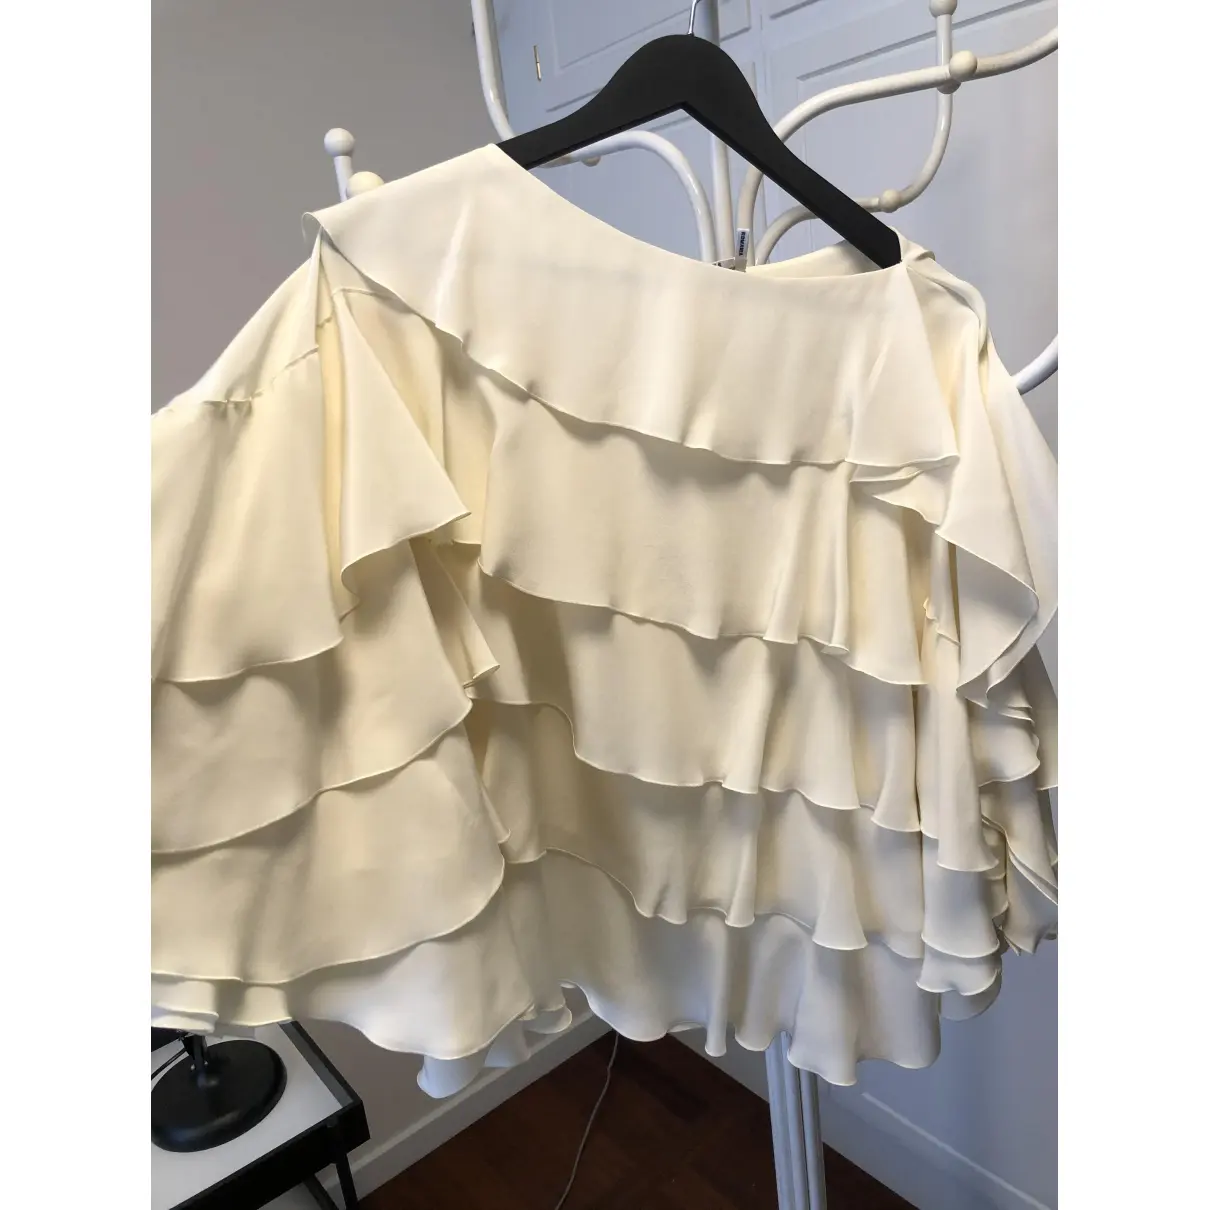 Buy Sonia Rykiel Silk blouse online